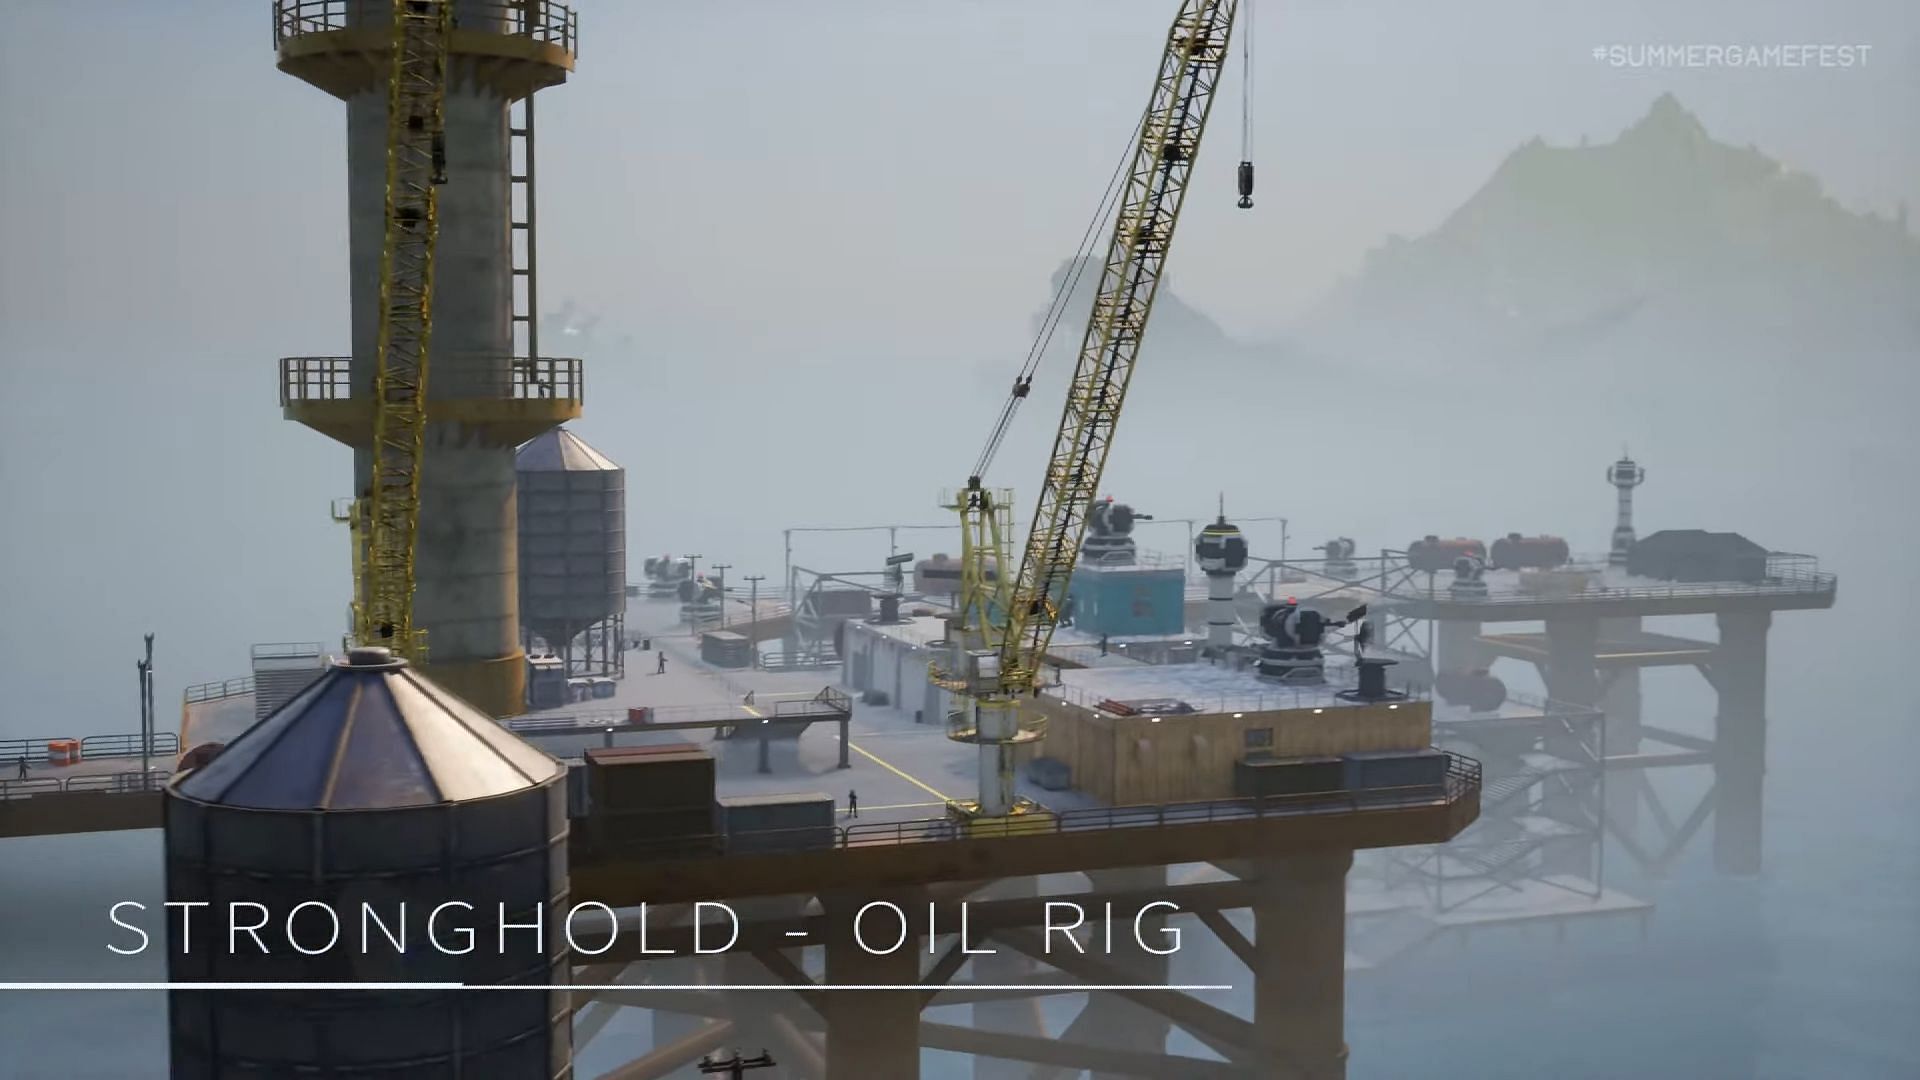 Oil Rig Stronghold (Image via Pocketpair, Inc.)